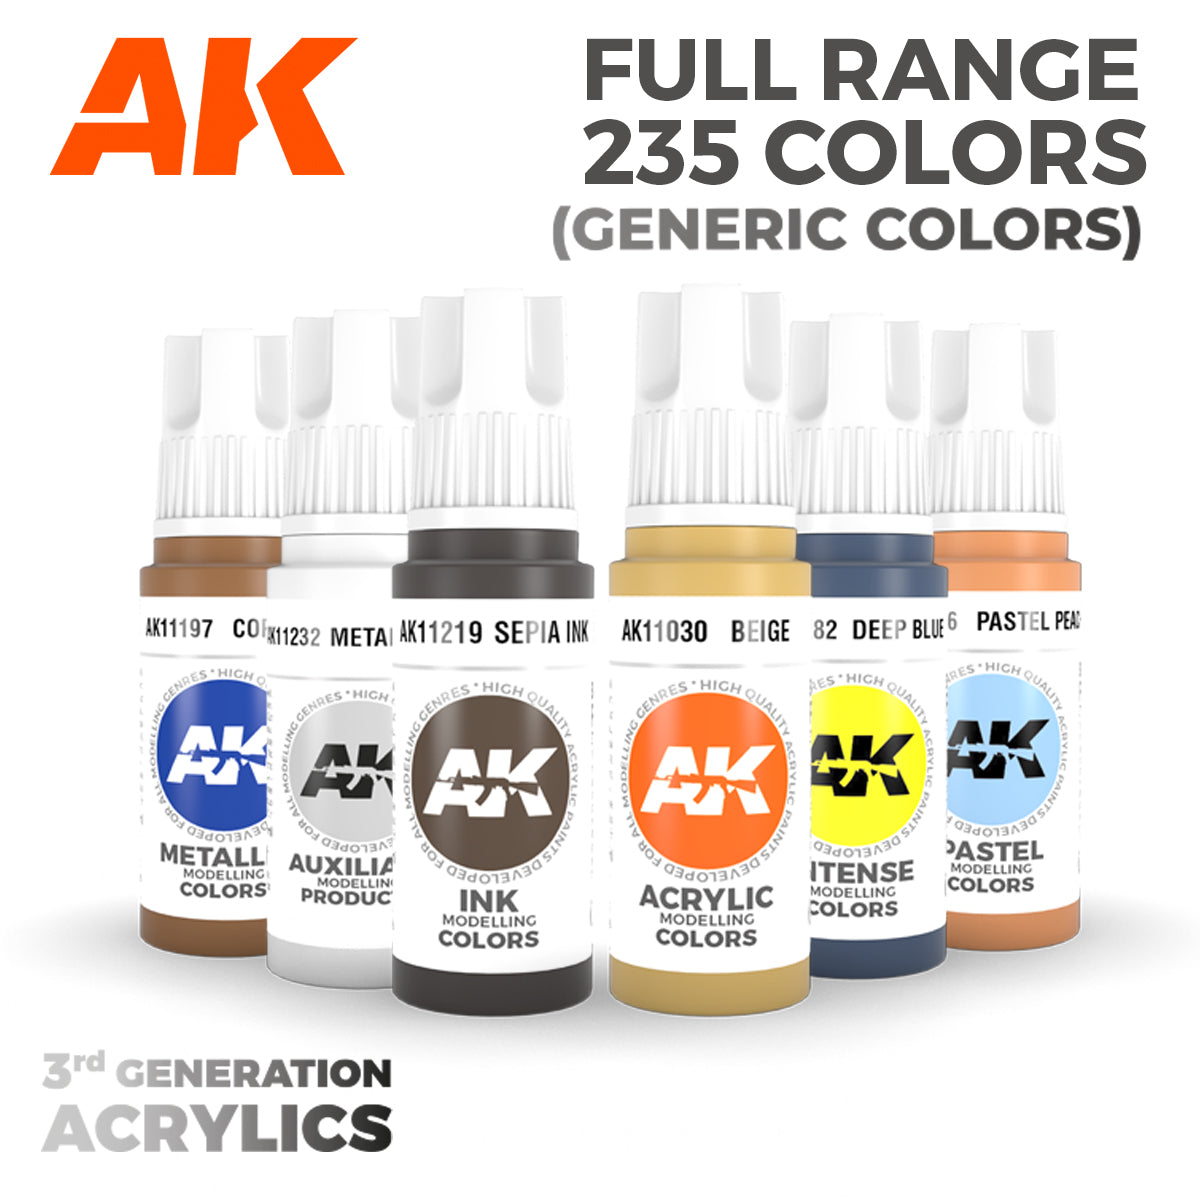 AK 3rd Generation Acrylic